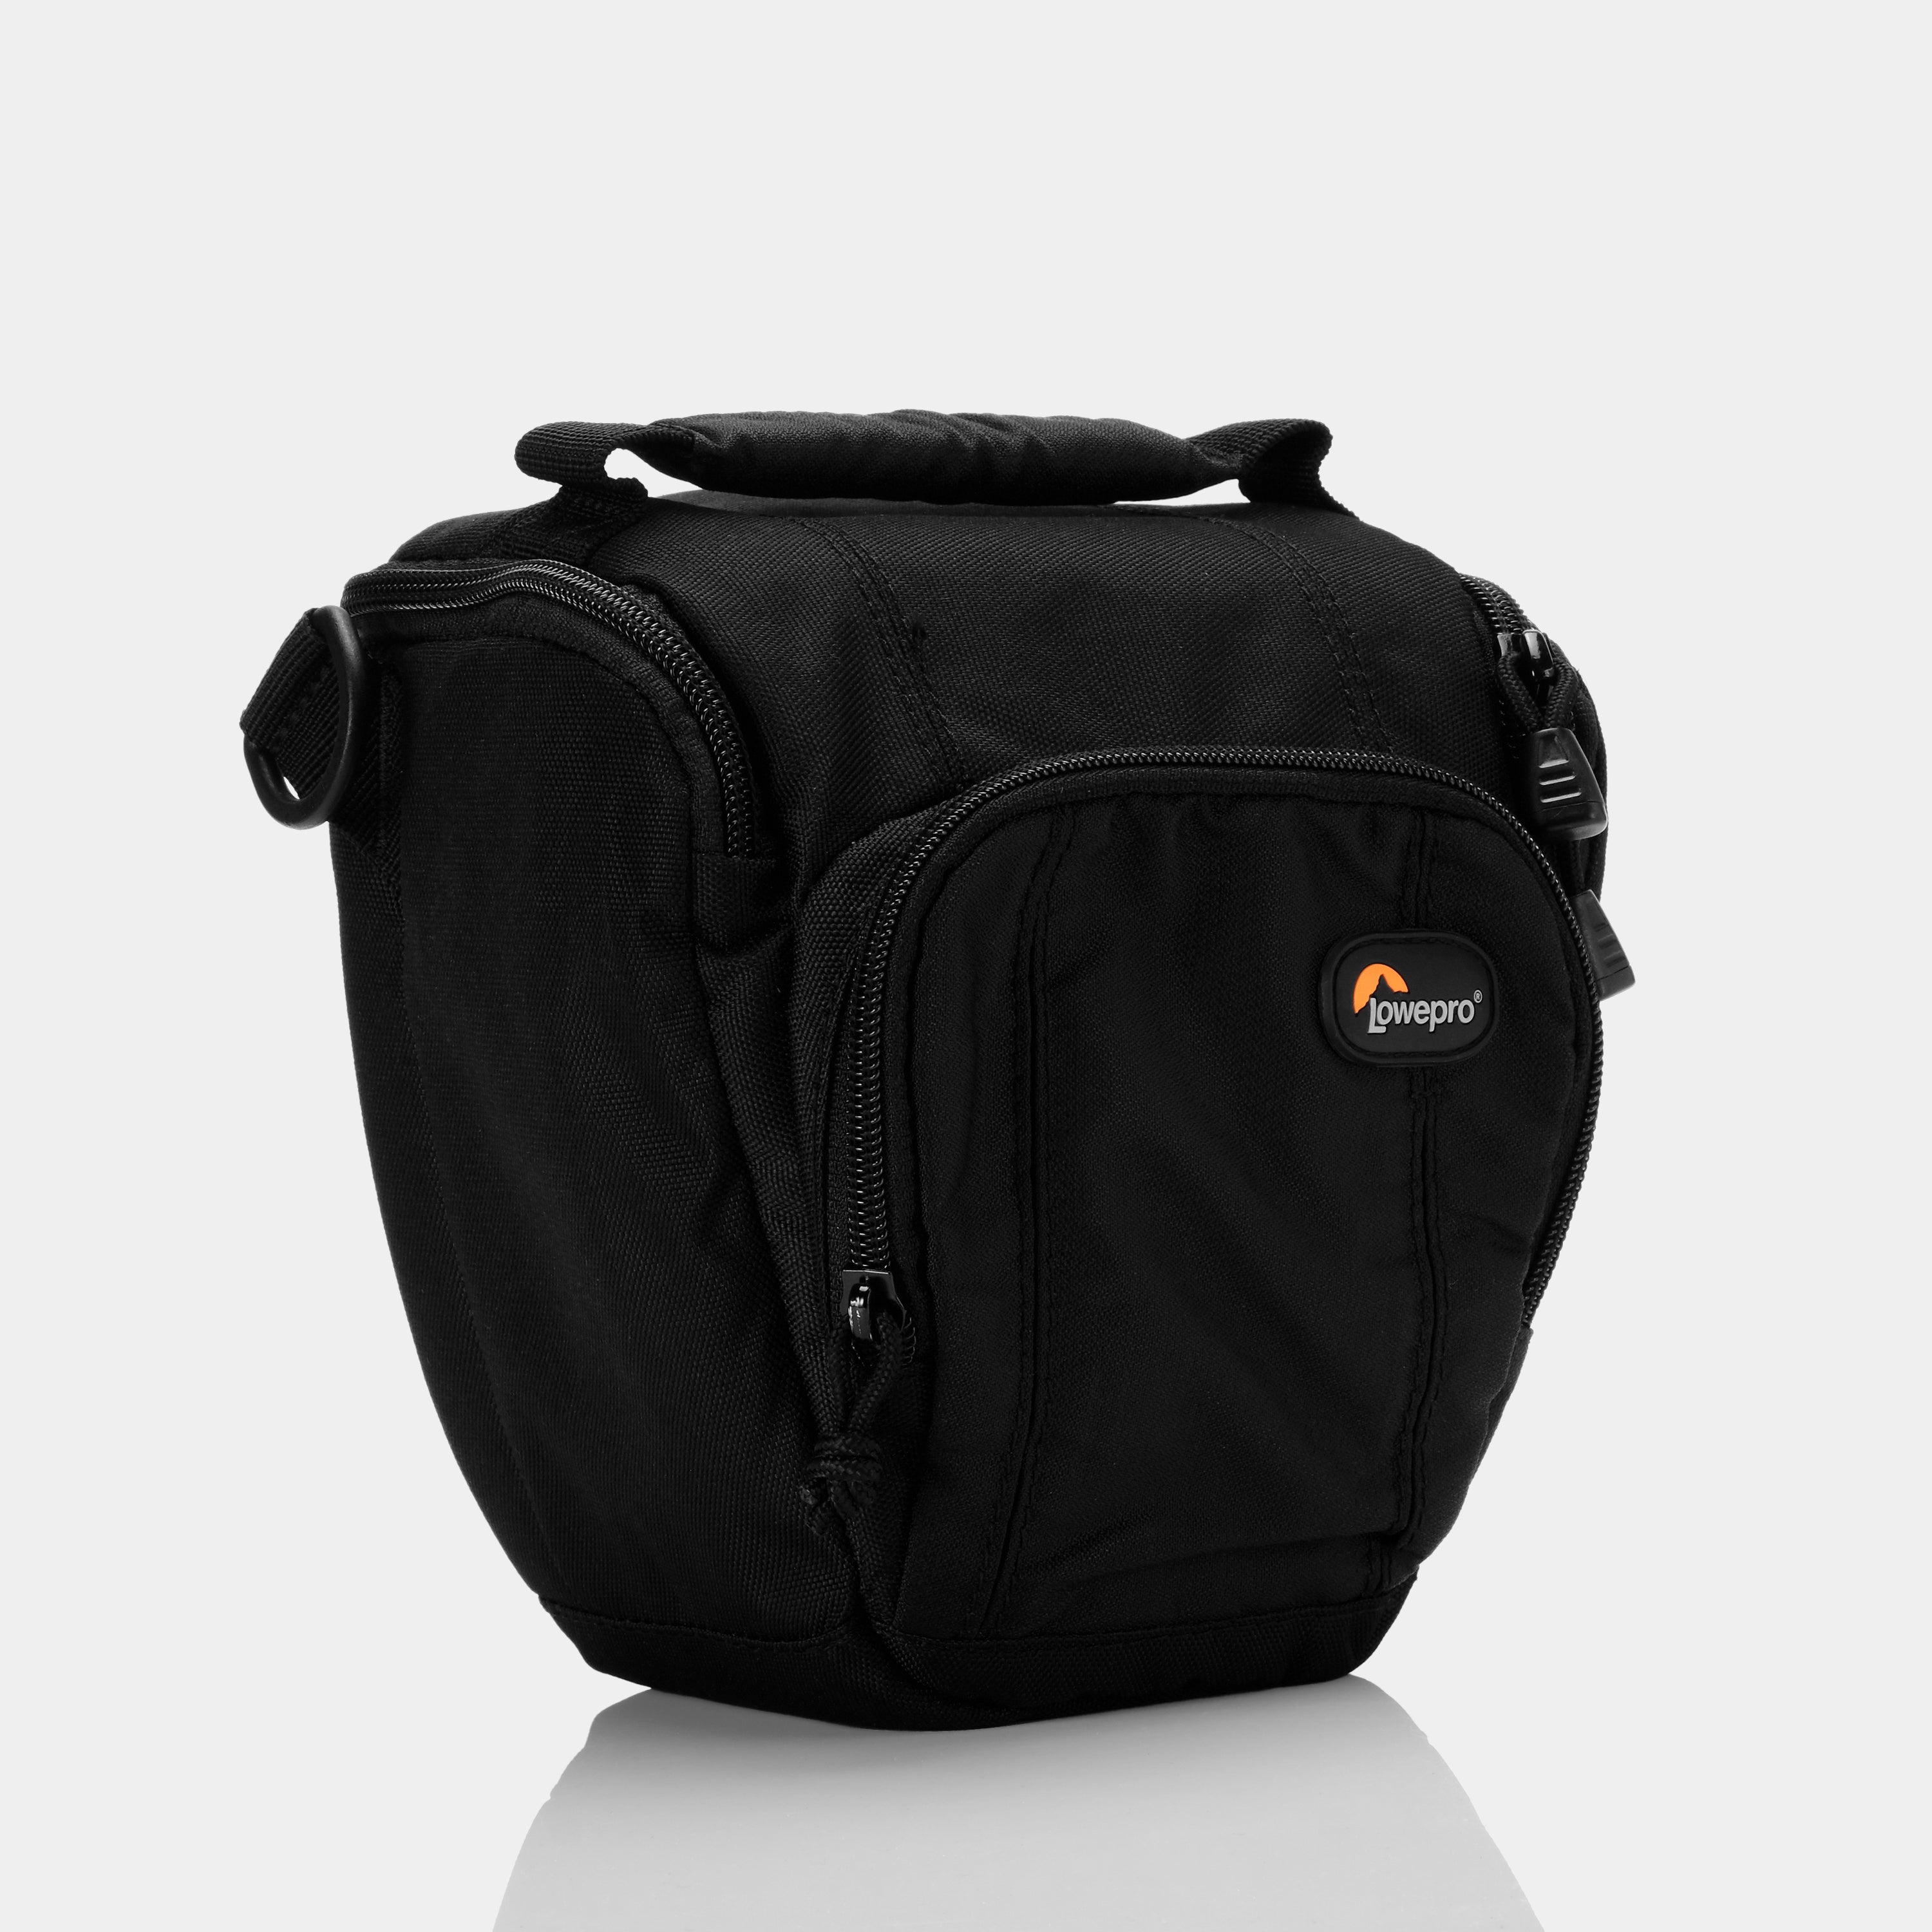 Lowepro Black Camera Bag